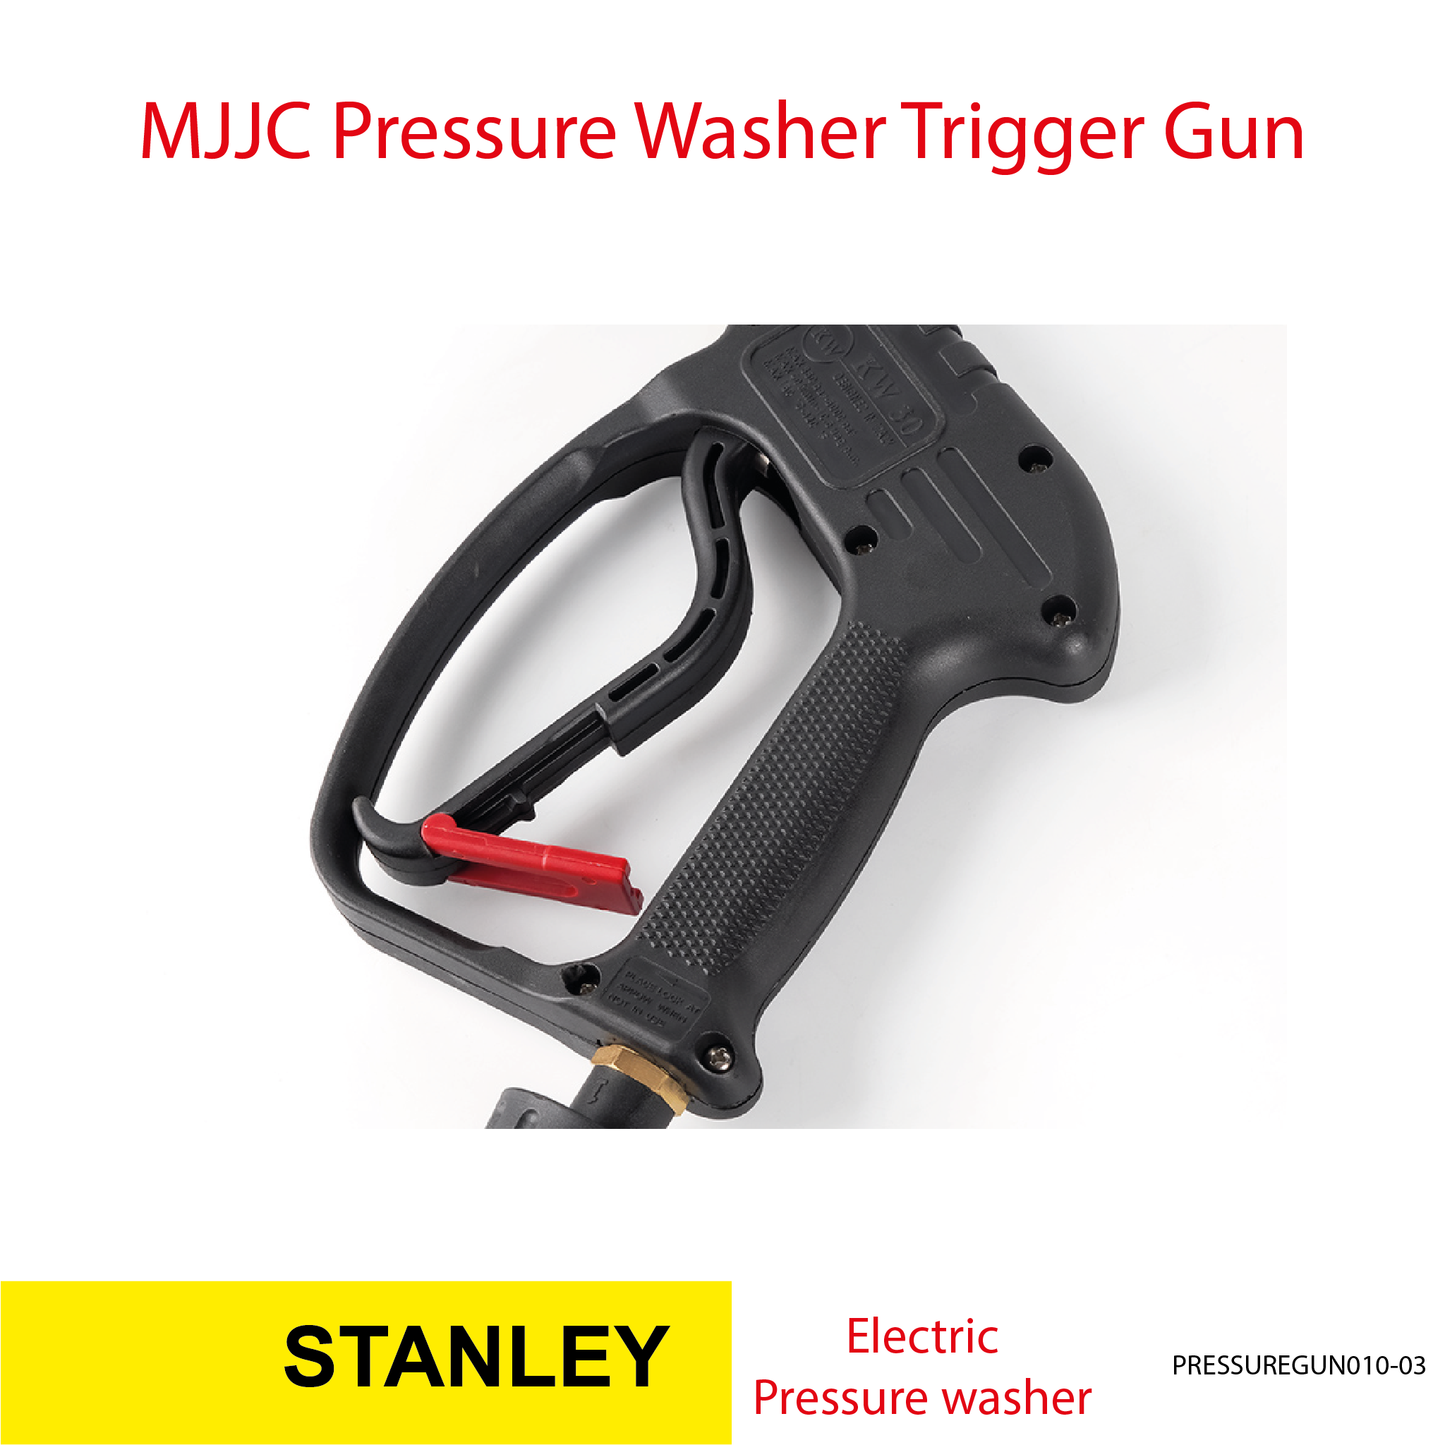 Stanley Electric Pressure Washer - MJJC Light Weight Trigger Spray Gun with Live Swivel